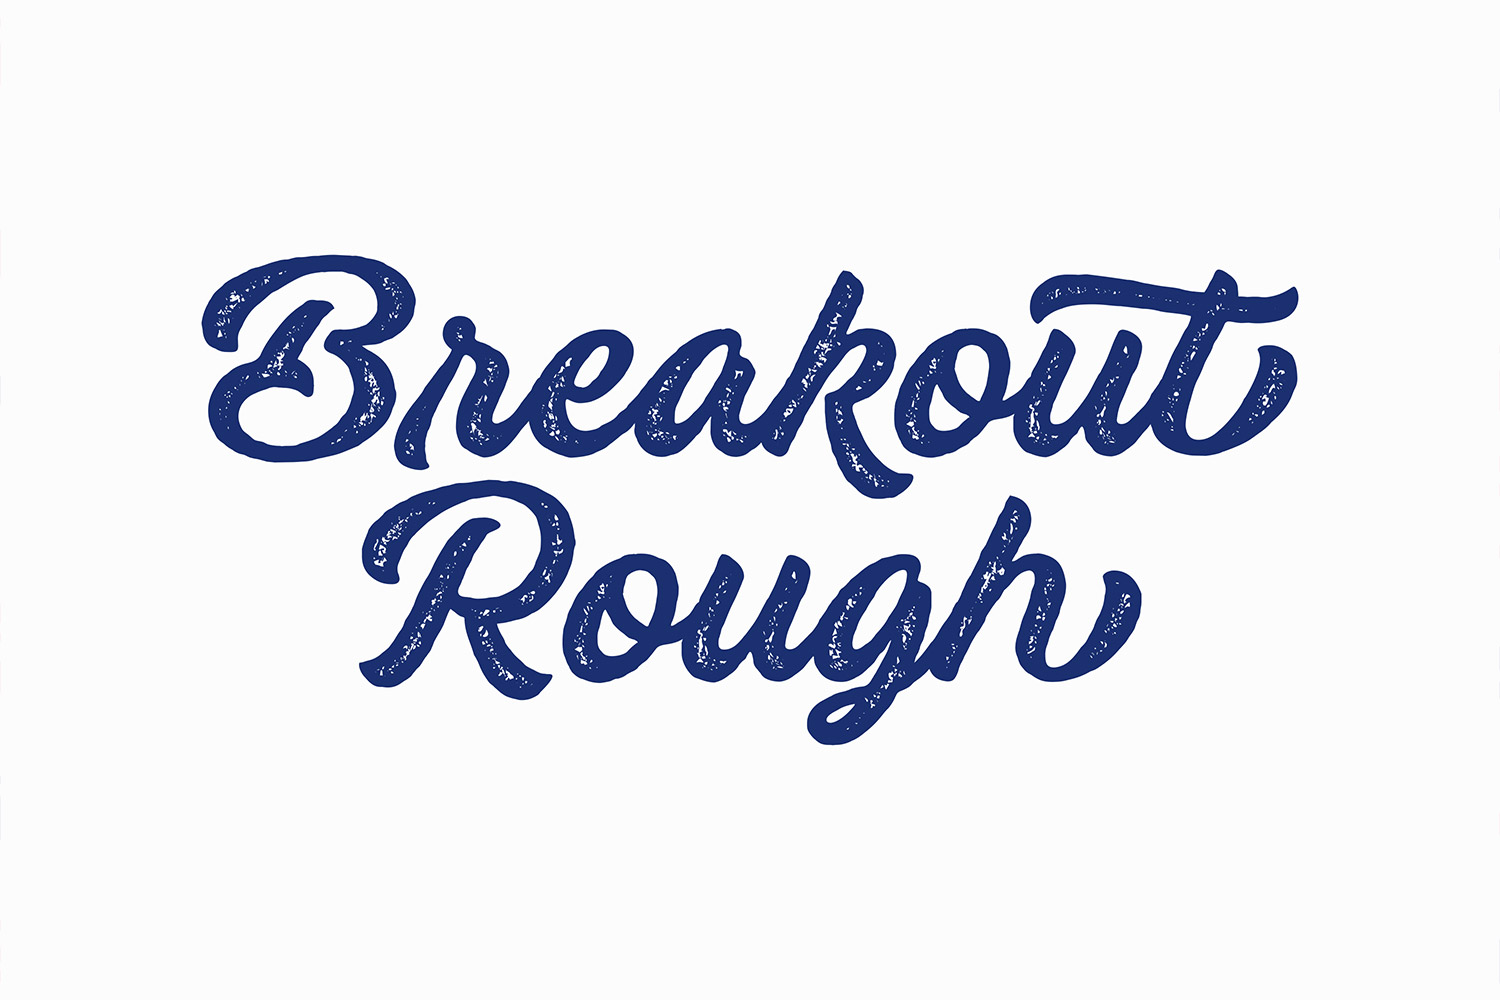 7-01 - Bhranta Ali-breakout